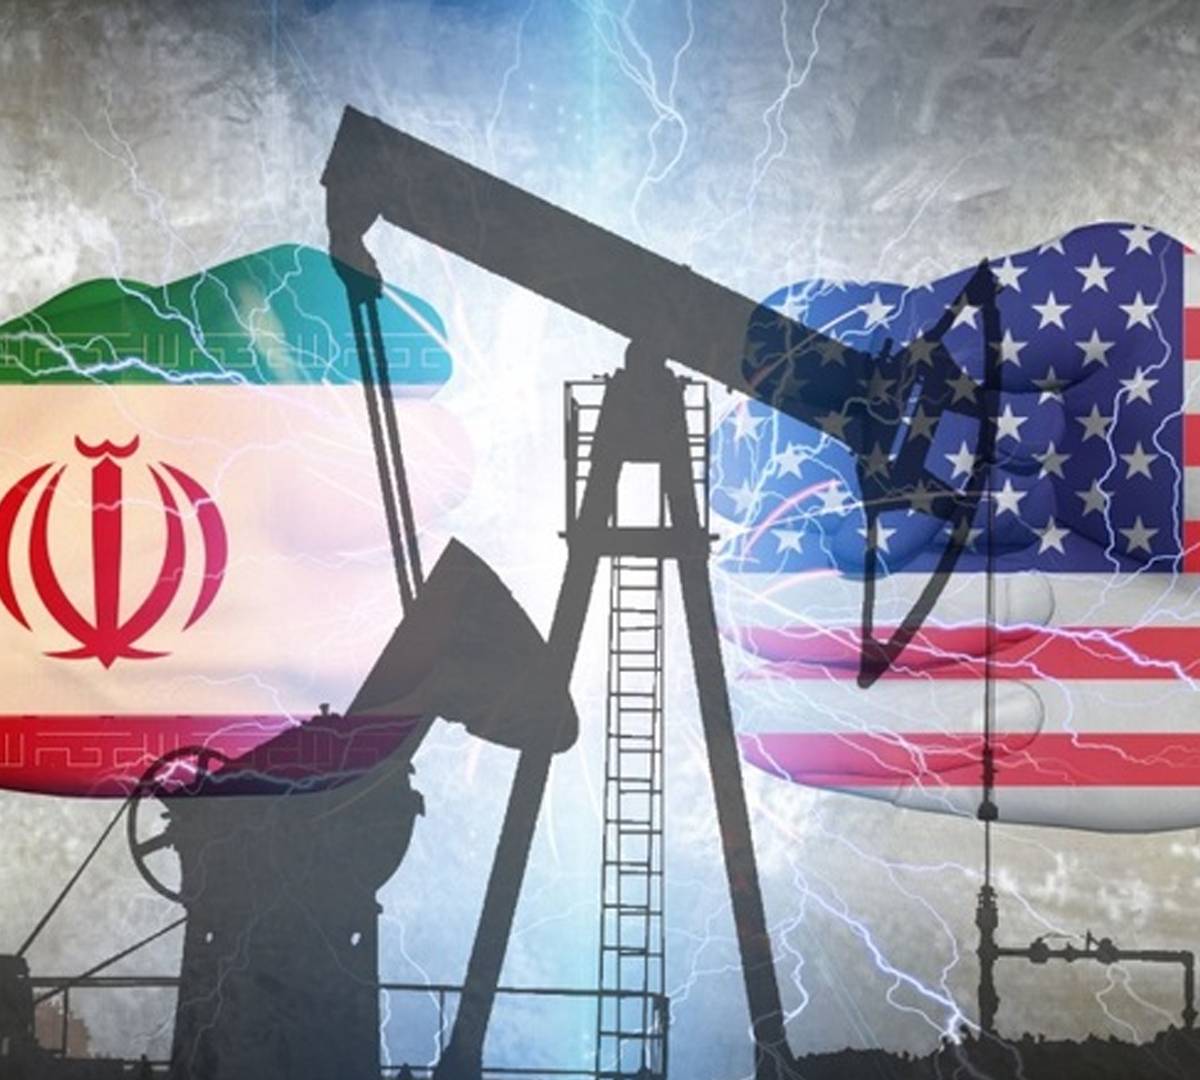 Геополитика нефти. Иранский тупик США